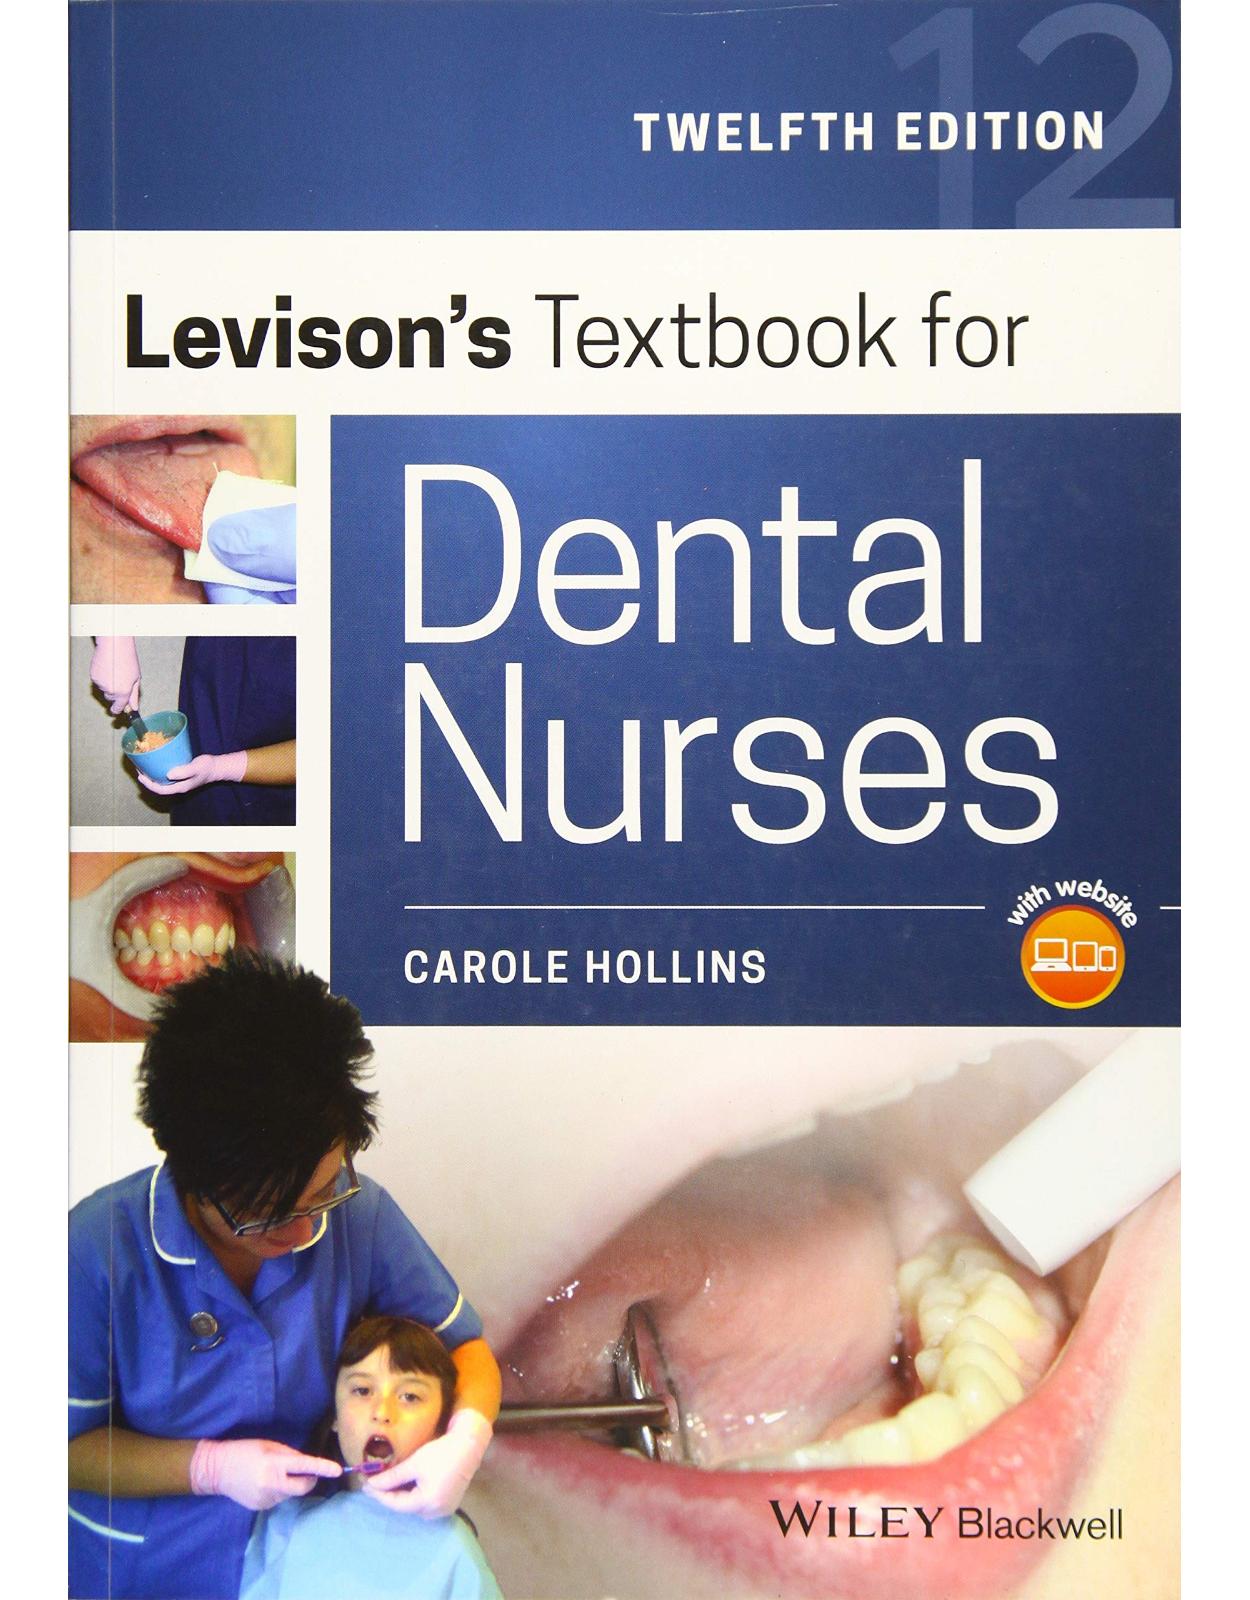 Levison's Textbook for Dental Nurses, 12th Edition 